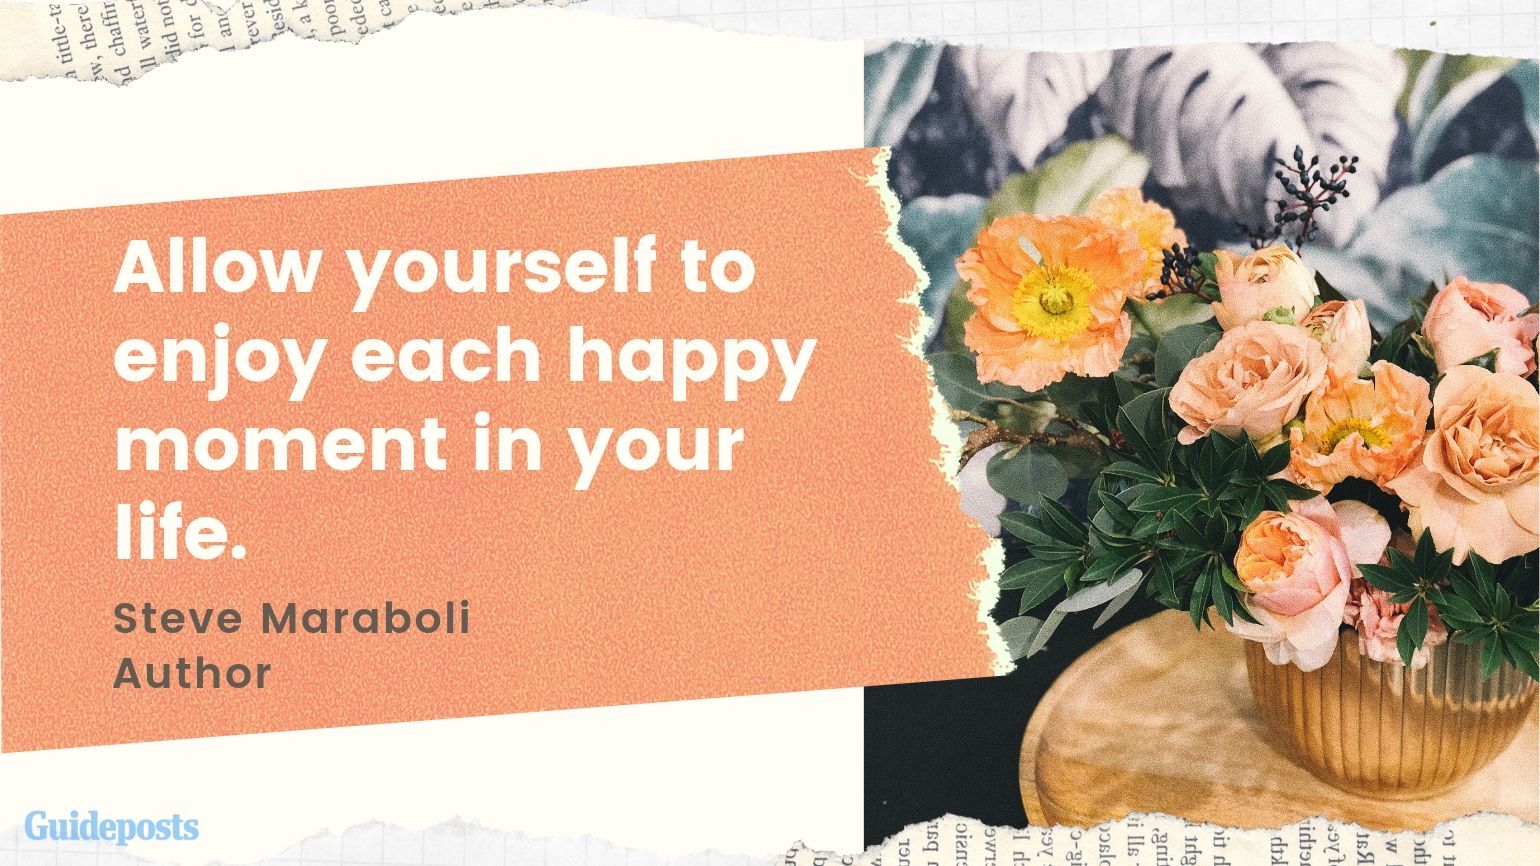 Allow yourself to enjoy yourself. – www.